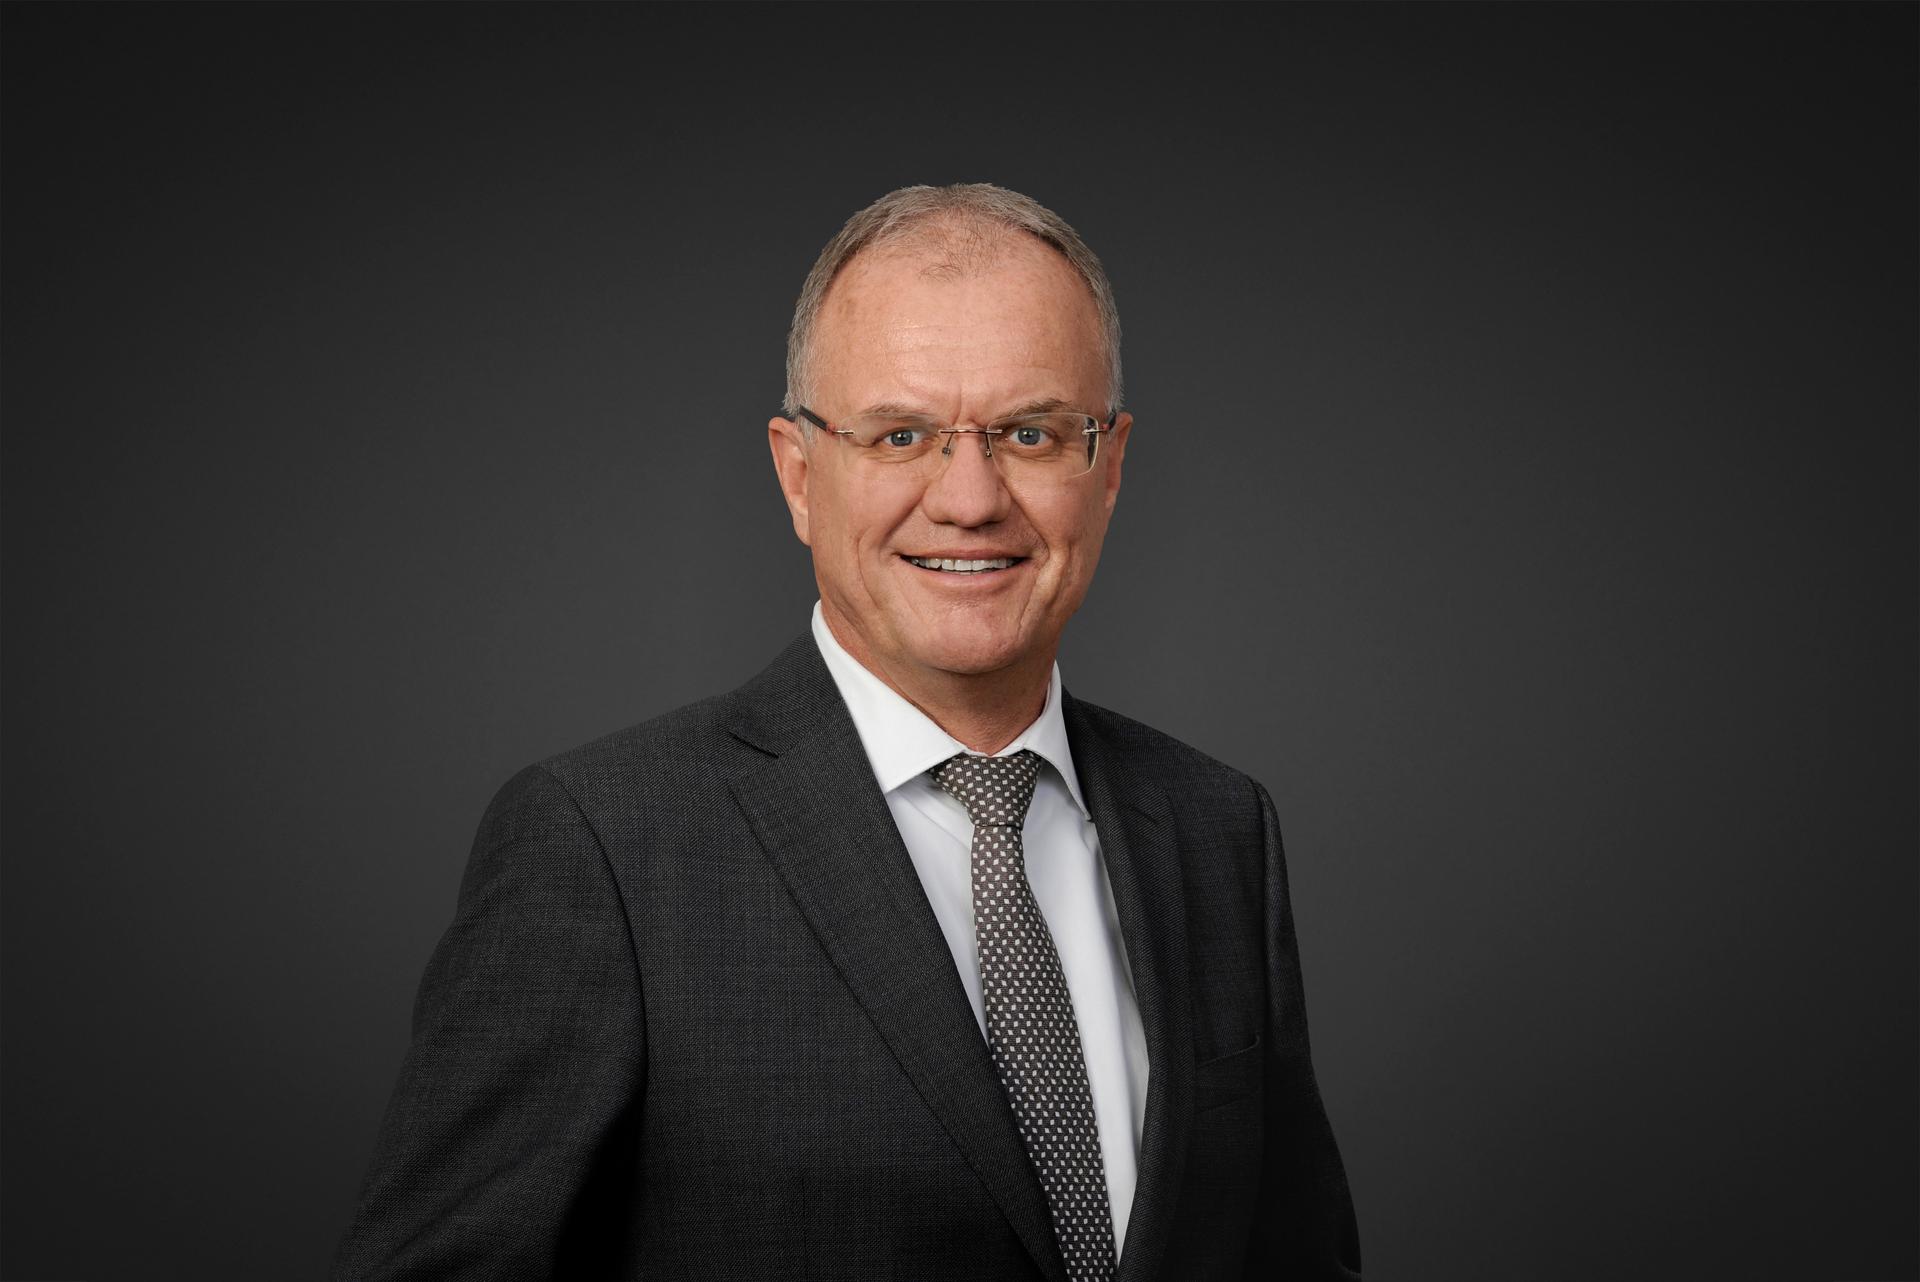 Portrait of Thomas Riecken, Securities specialist